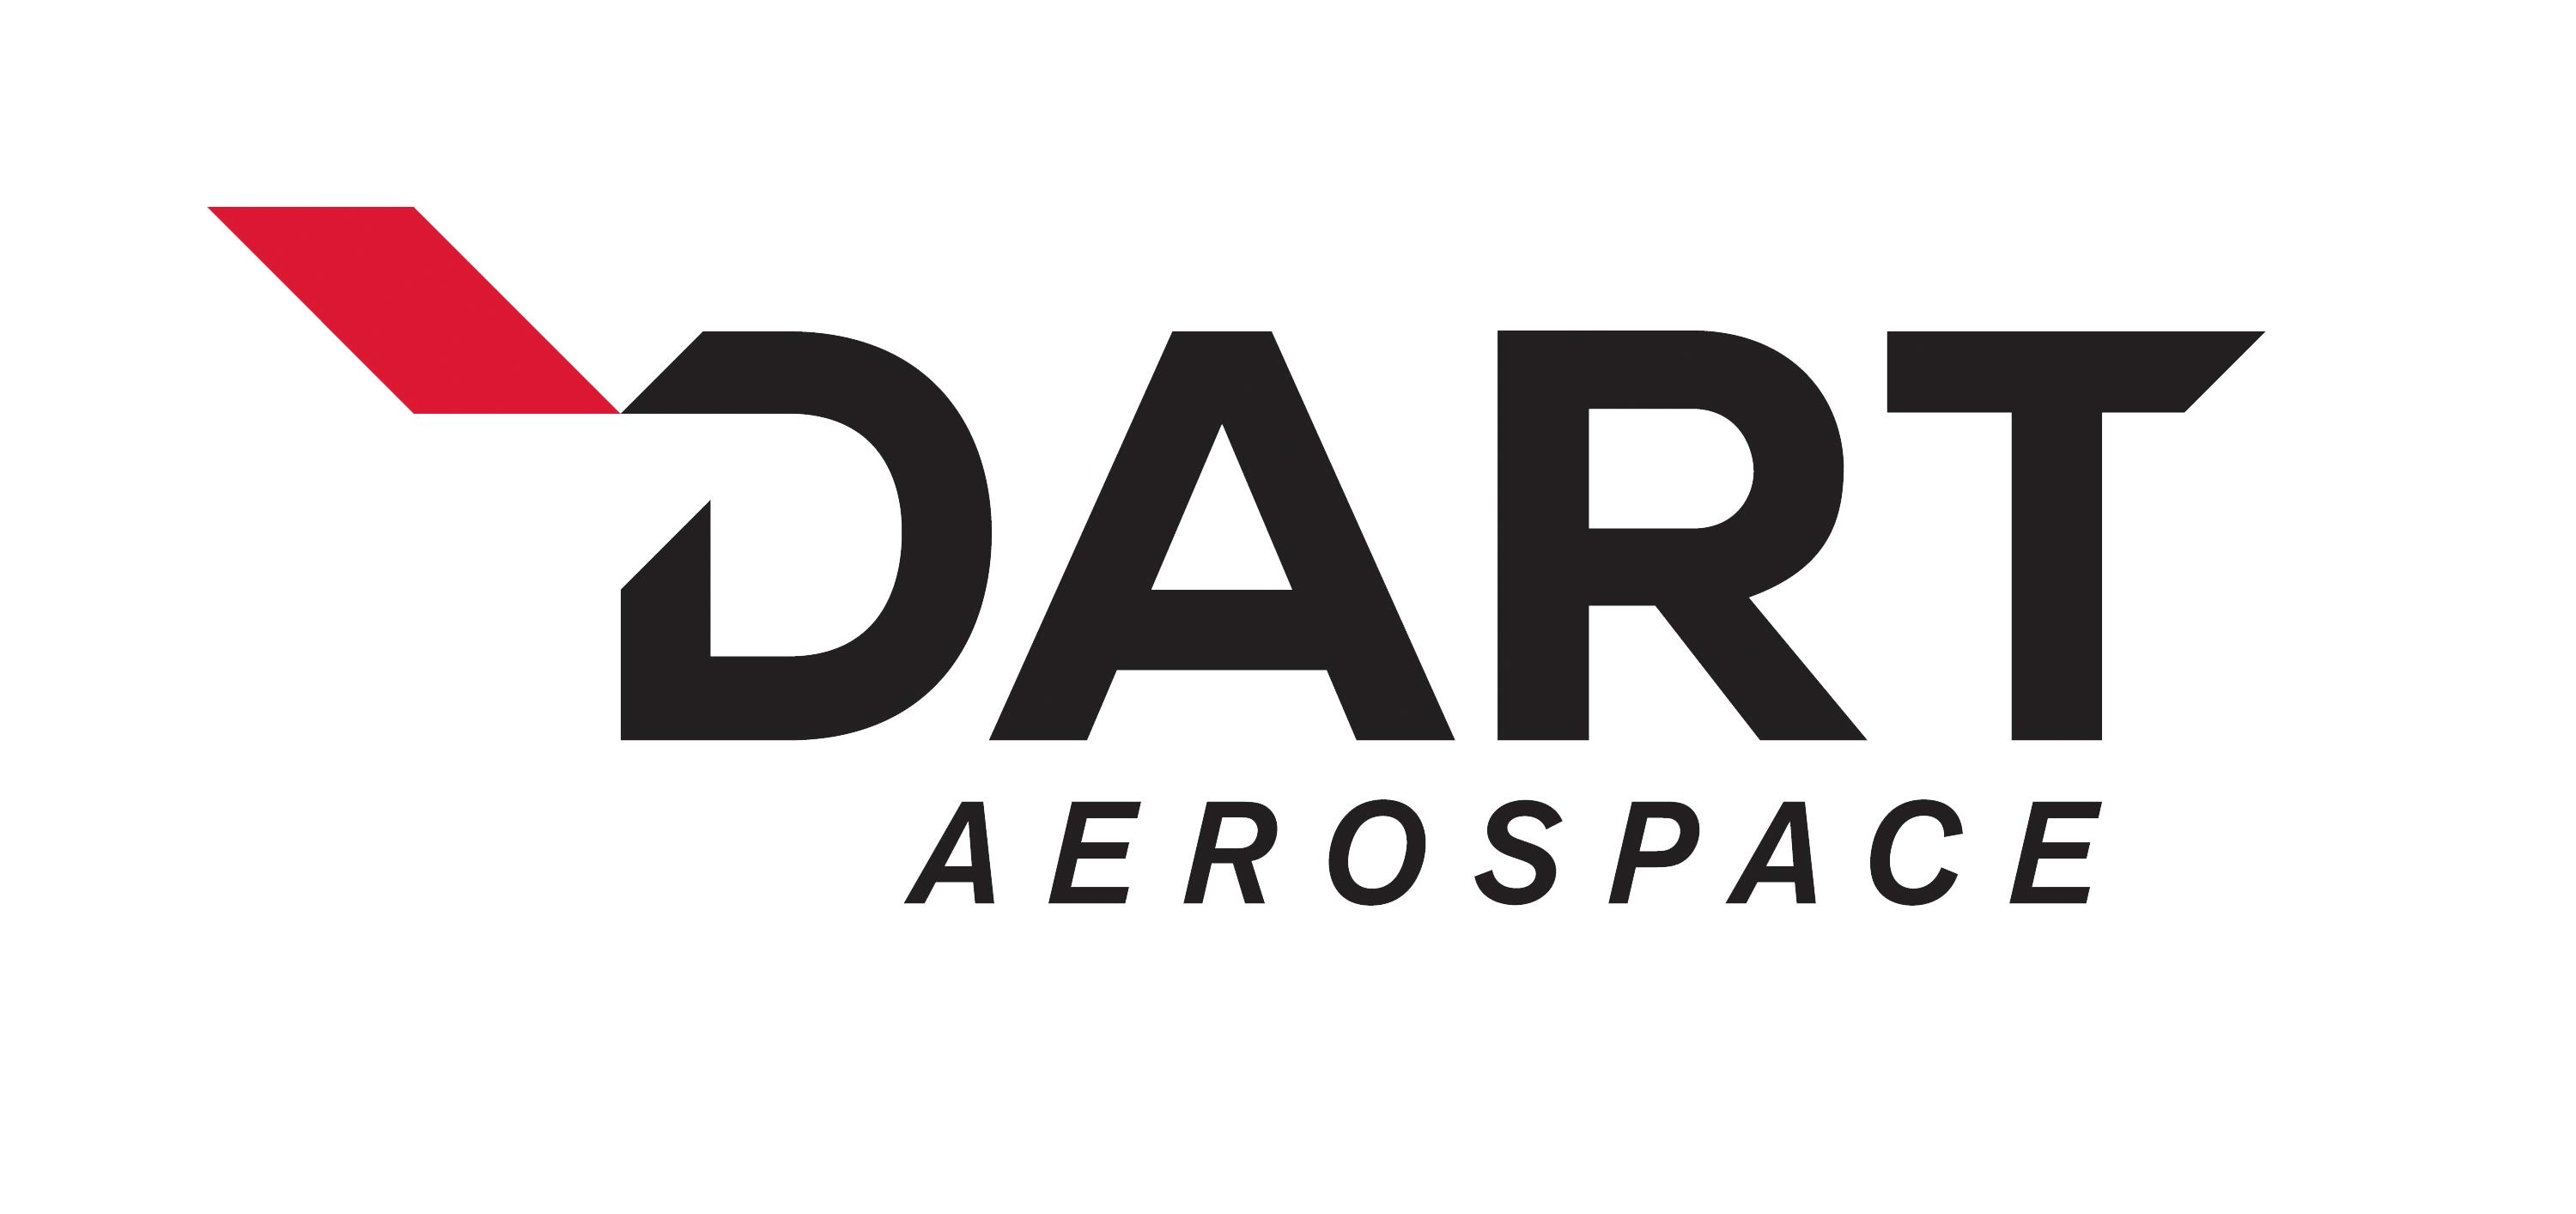 DART Logo